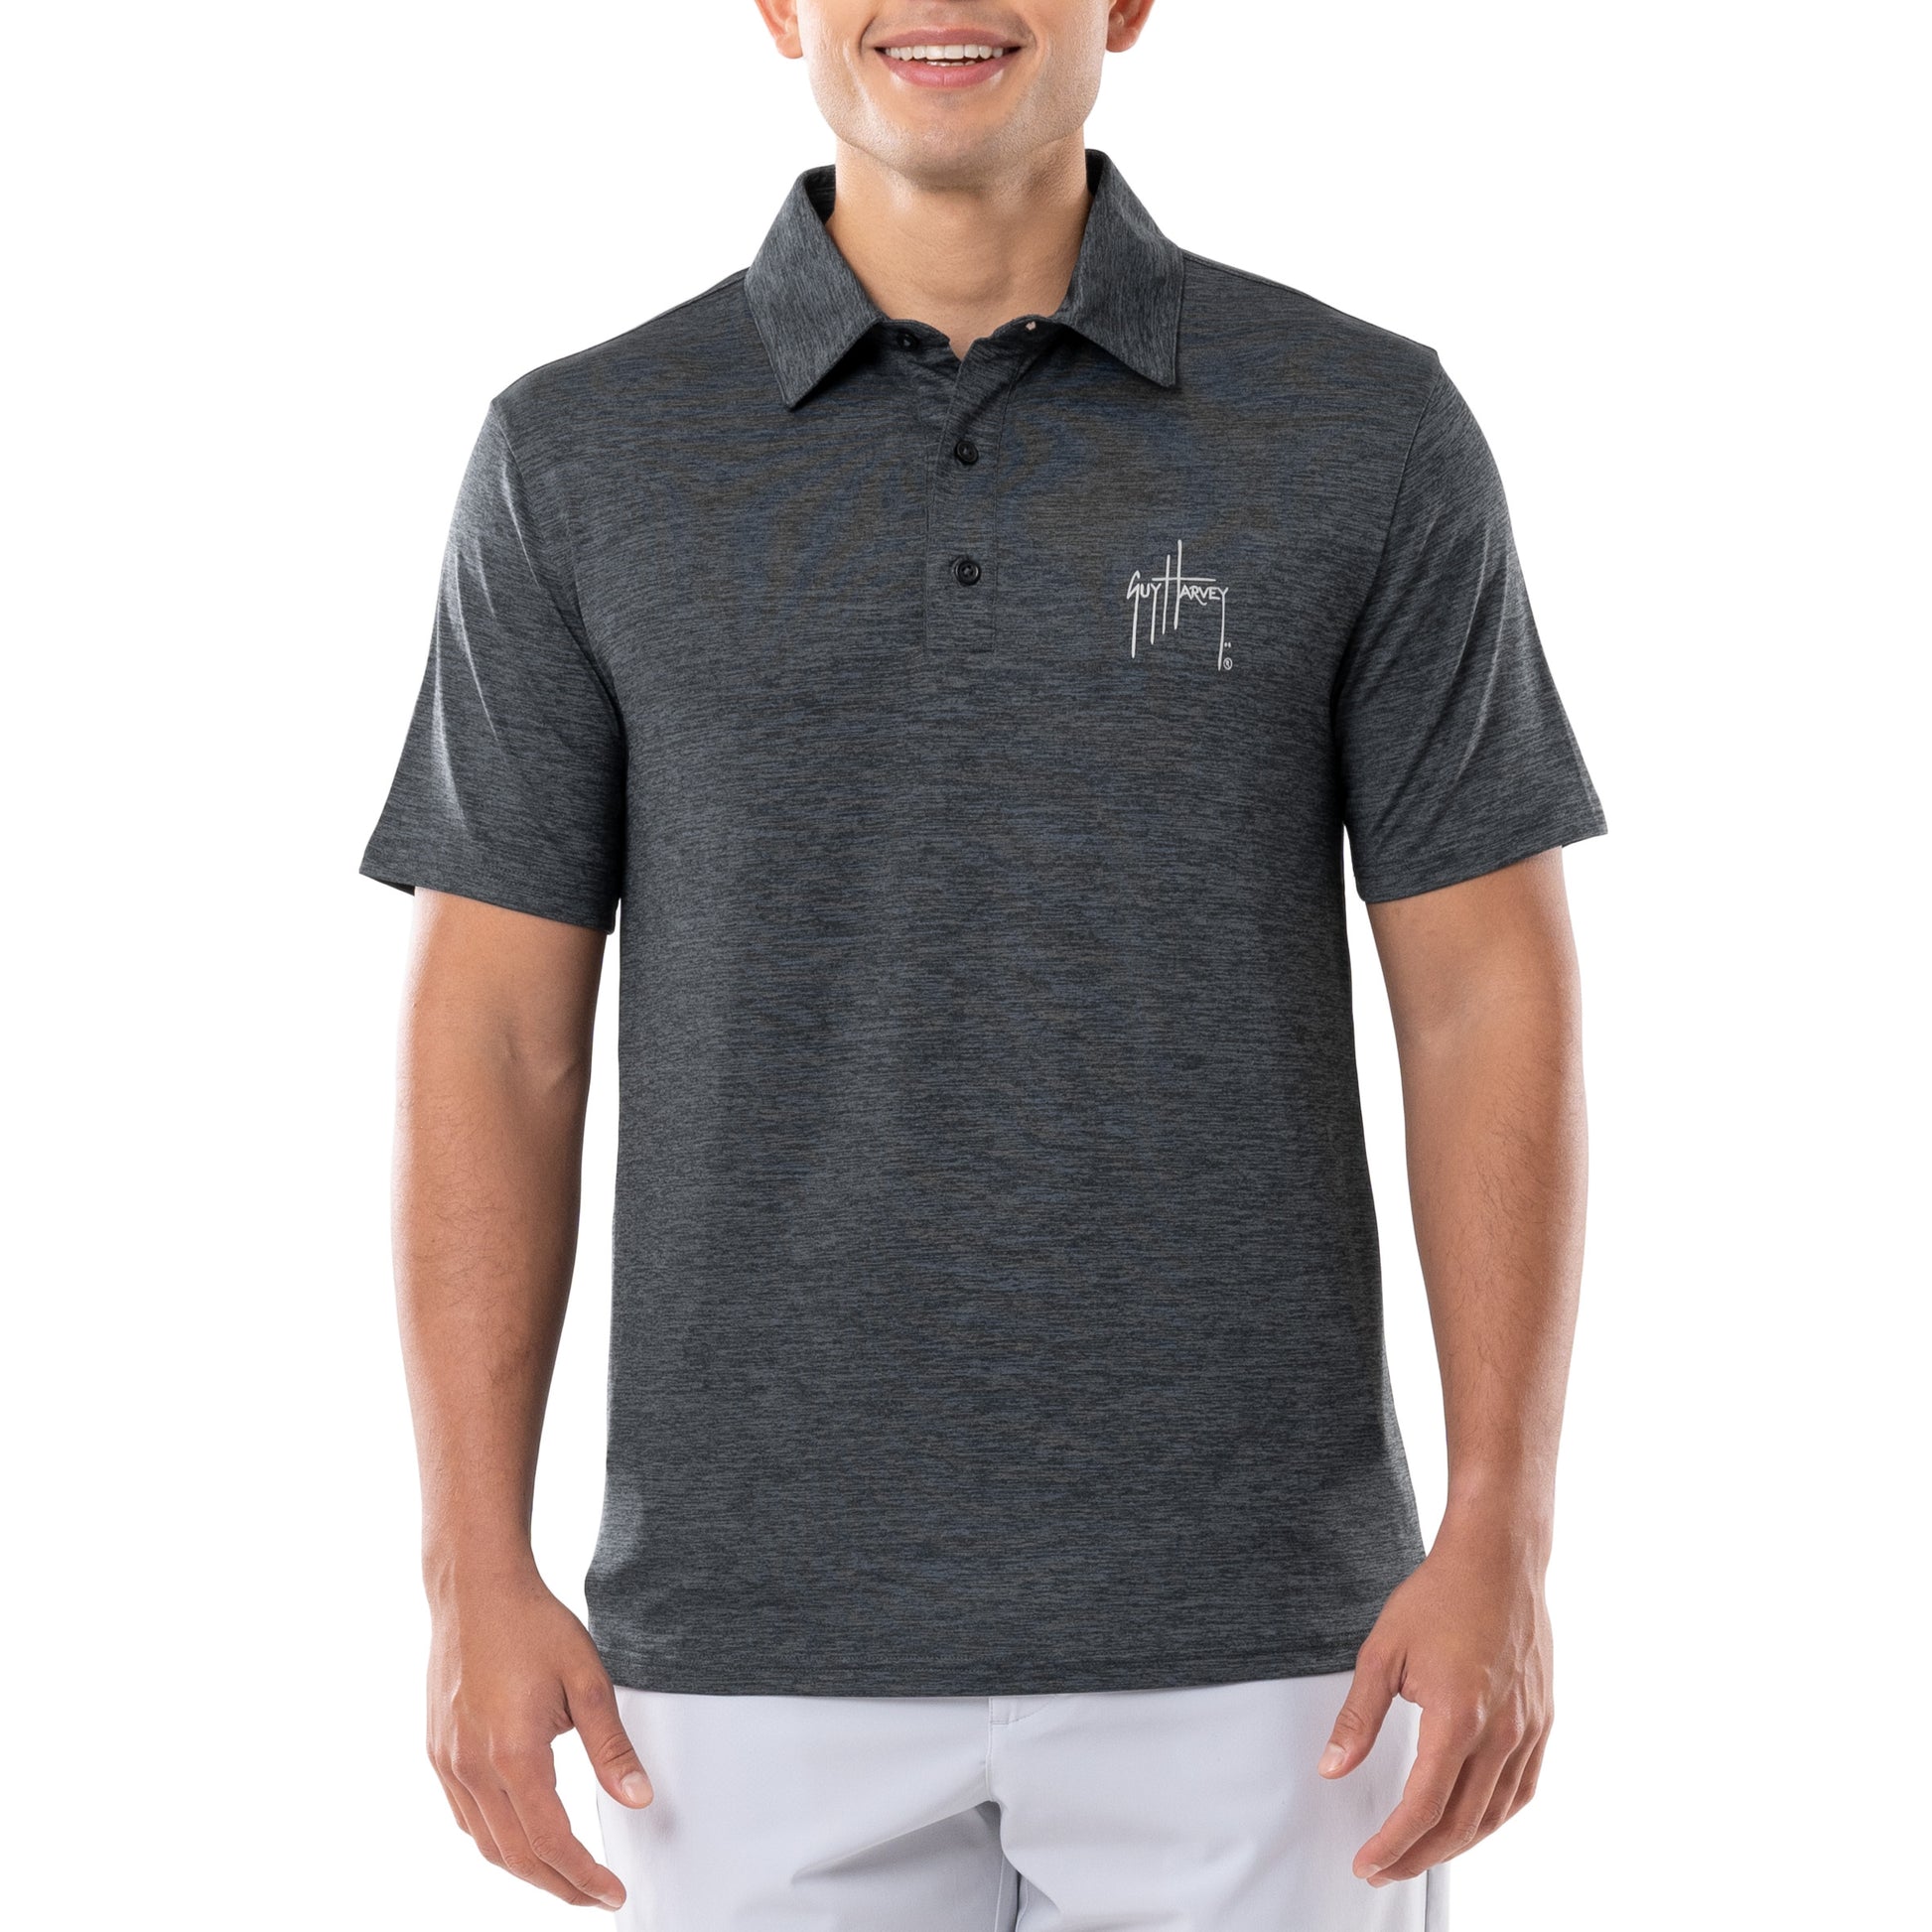 Men's Short Sleeve Polo Shirts, Men's Quality Polo Shirts